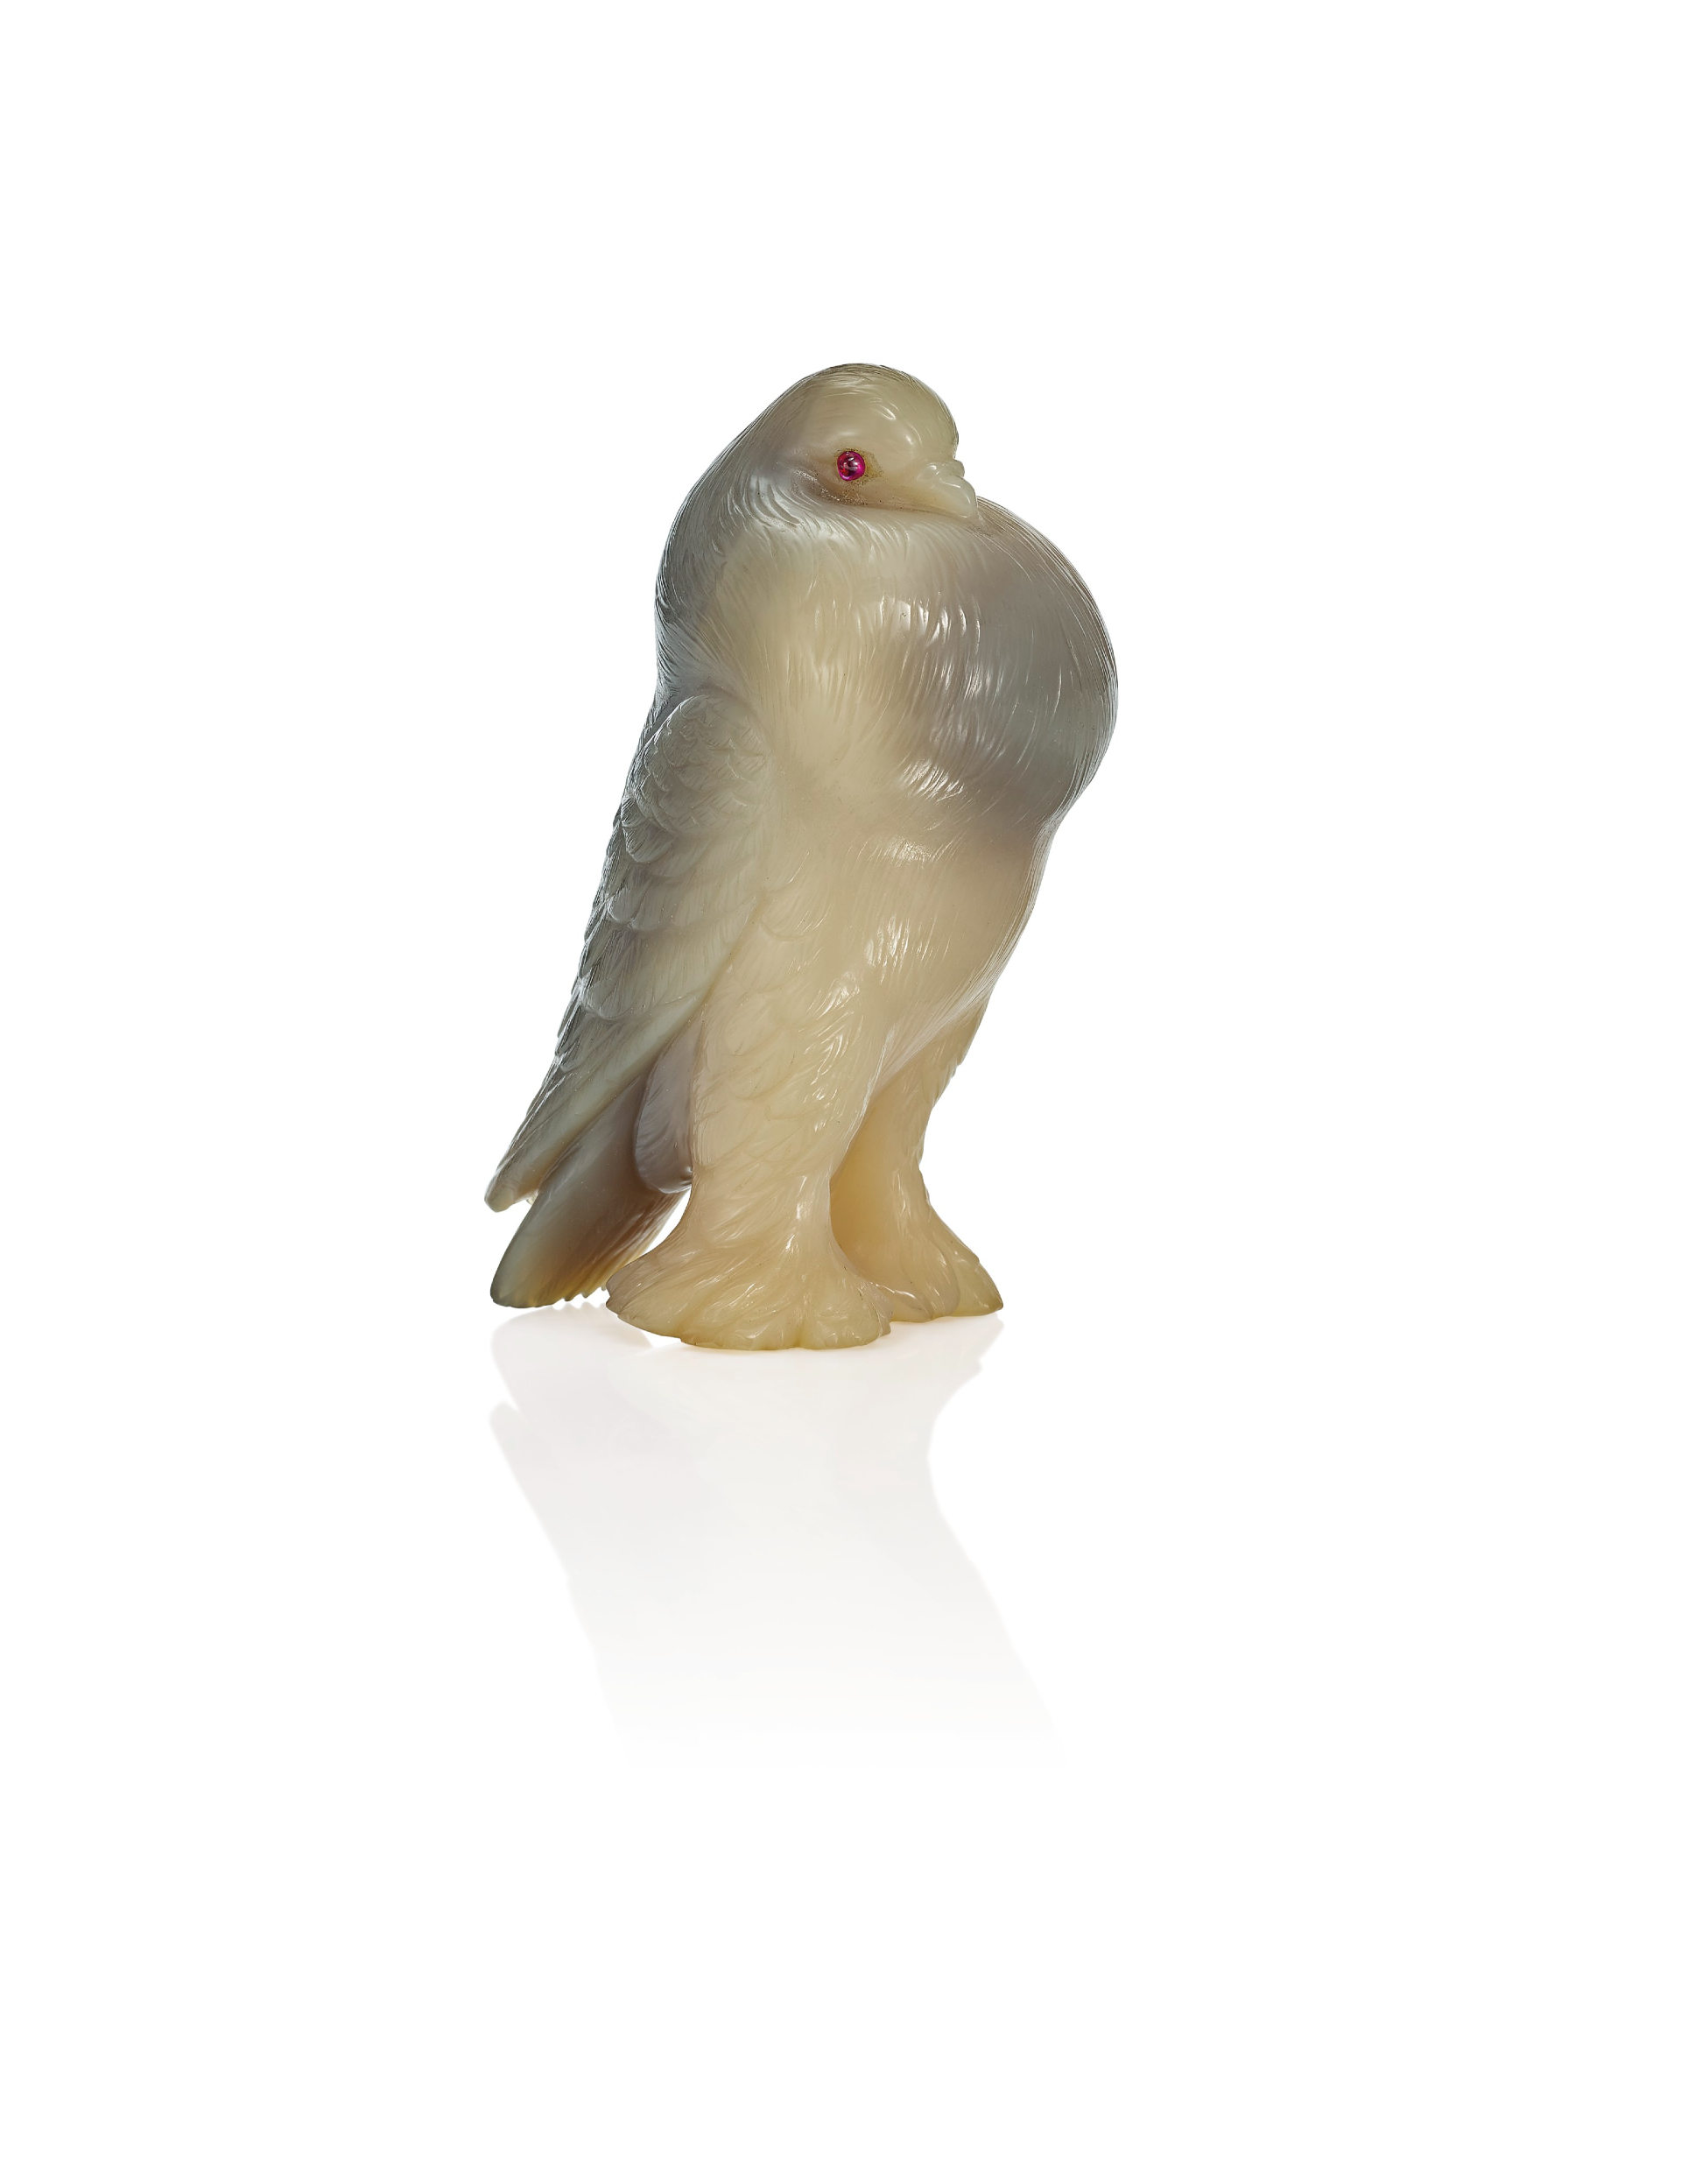 Фигурка голубя из халцедона, украшенная драгоценными камнями (&pound;50&ndash;70 тыс.)